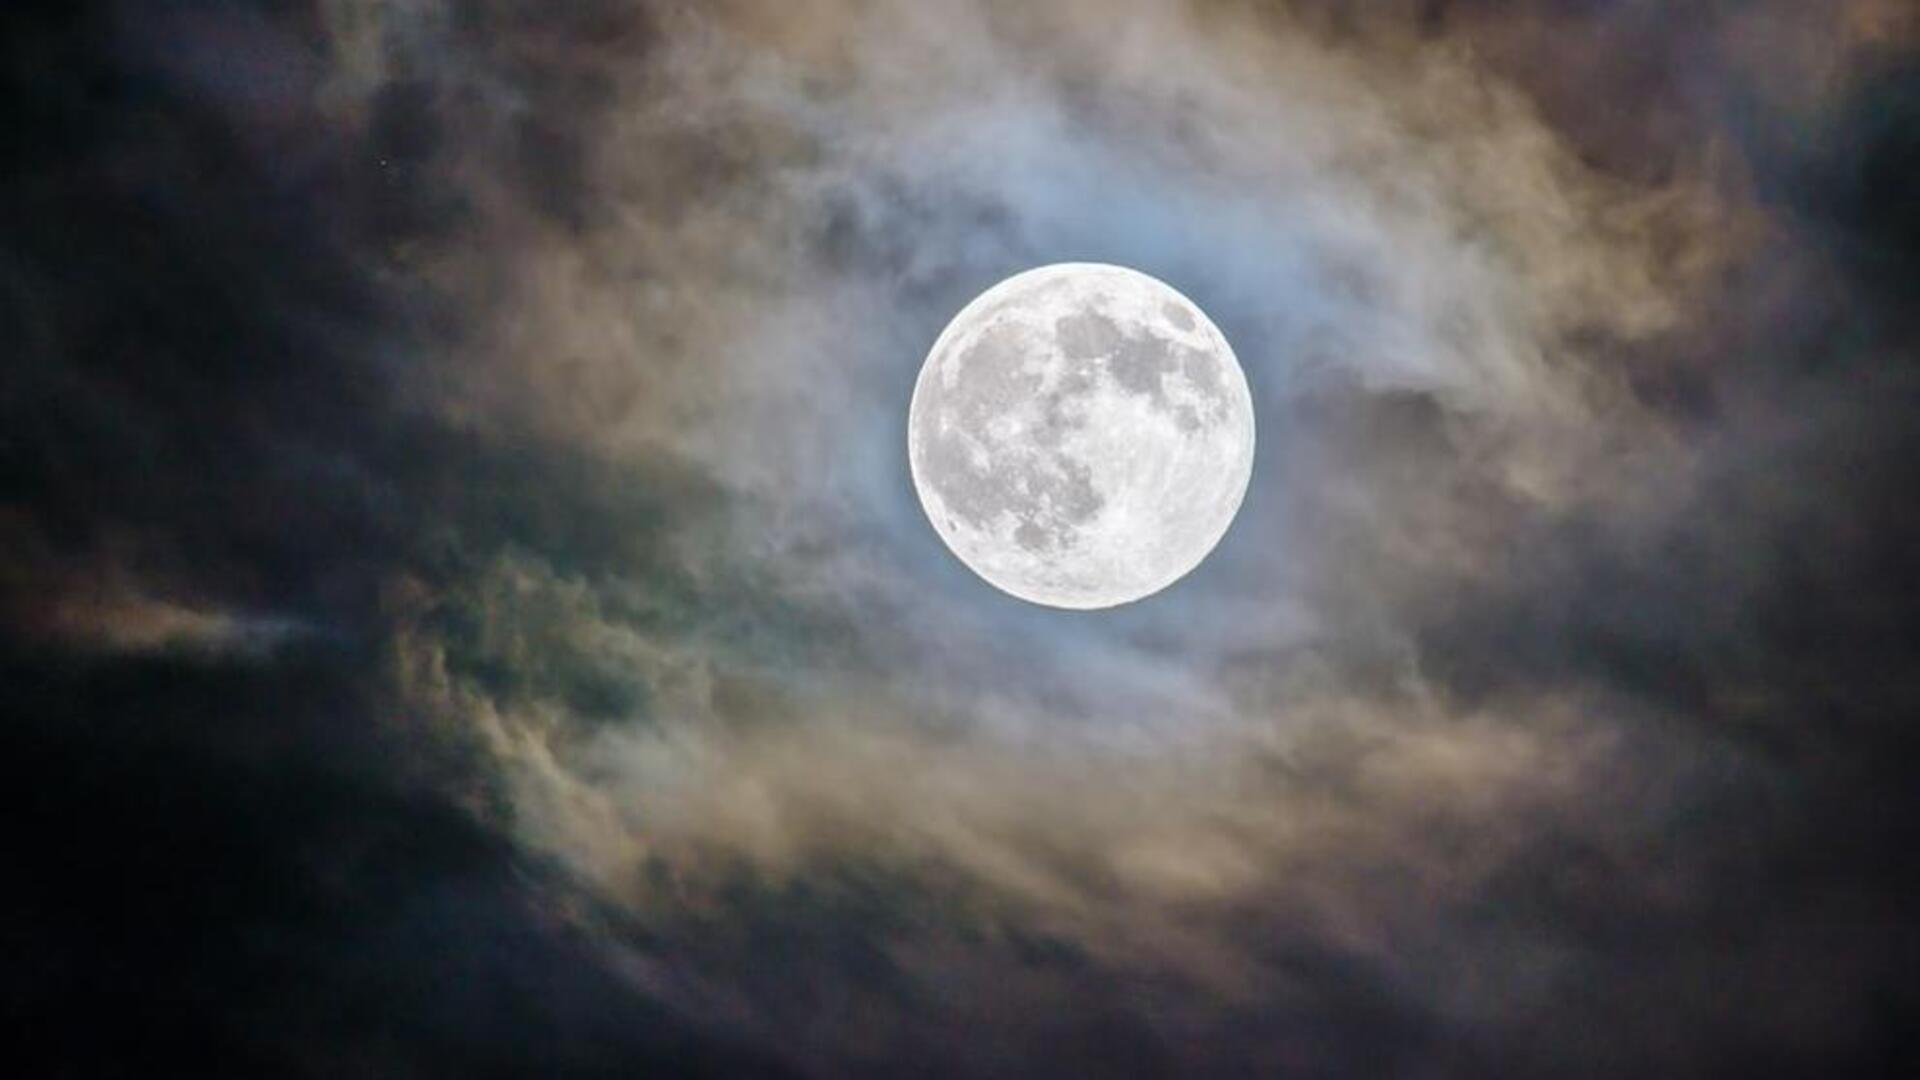 Full 'Beaver Moon' rises on November 27: How to watch